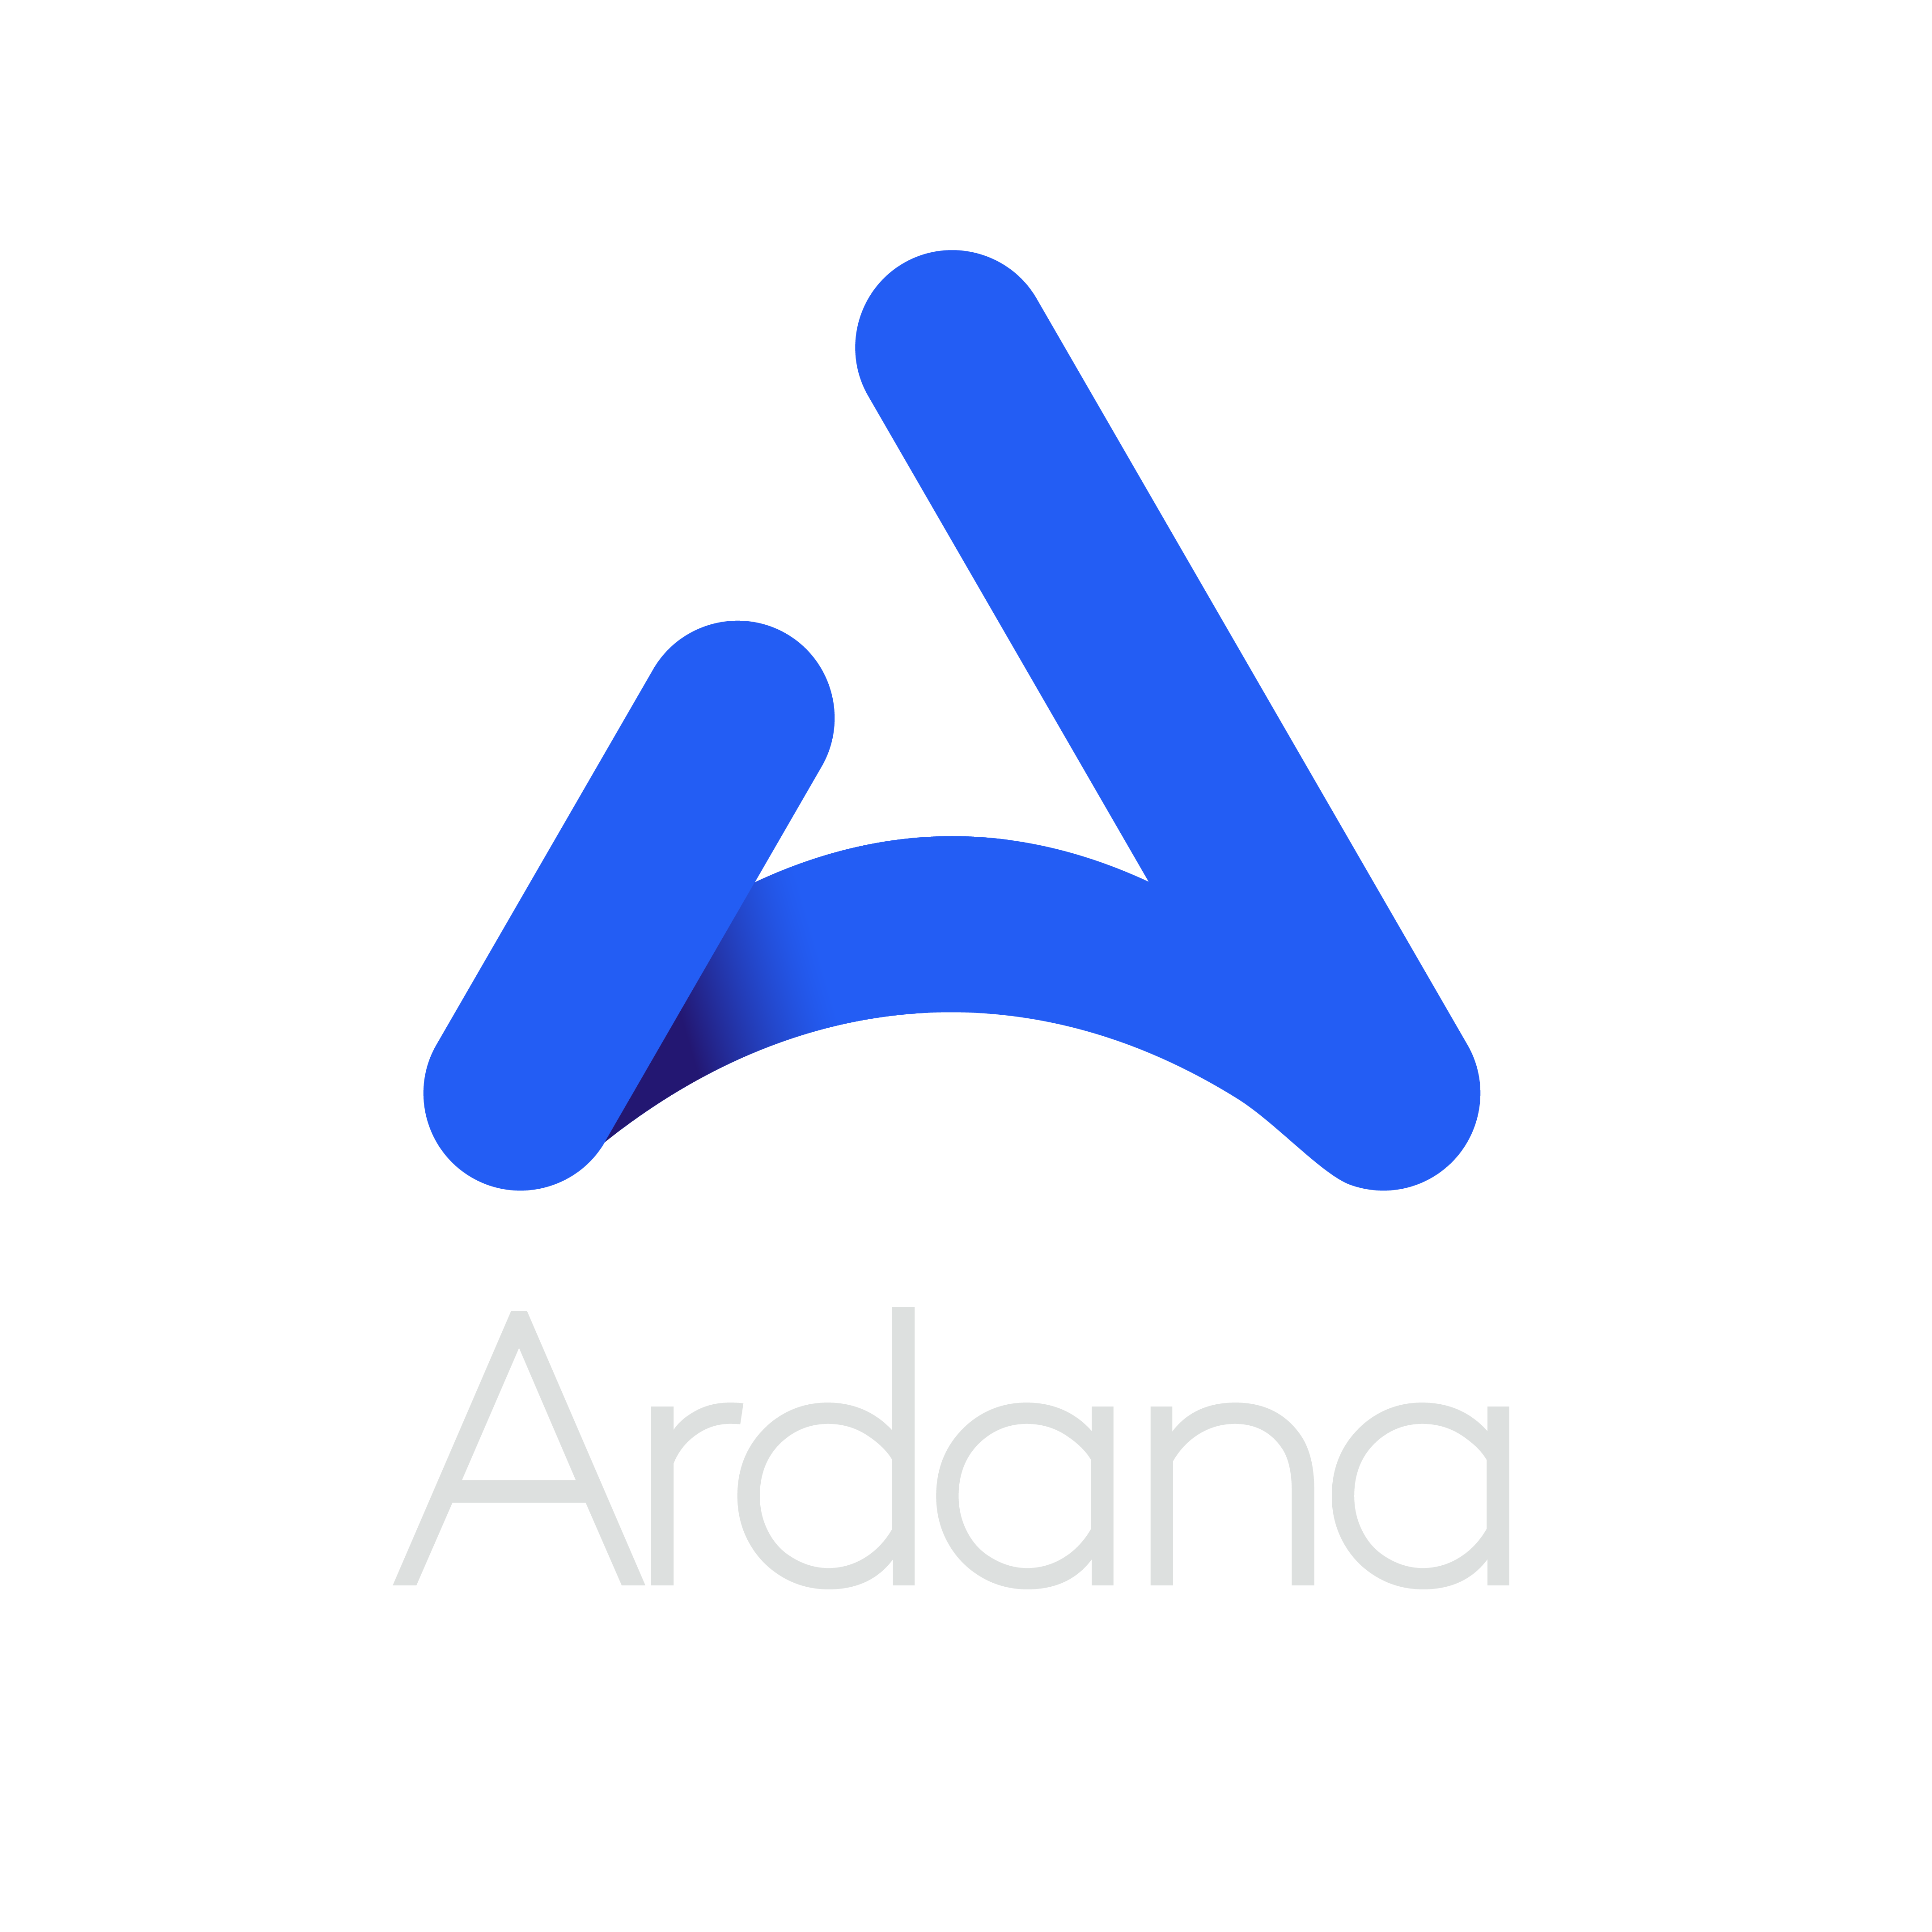 Ardana